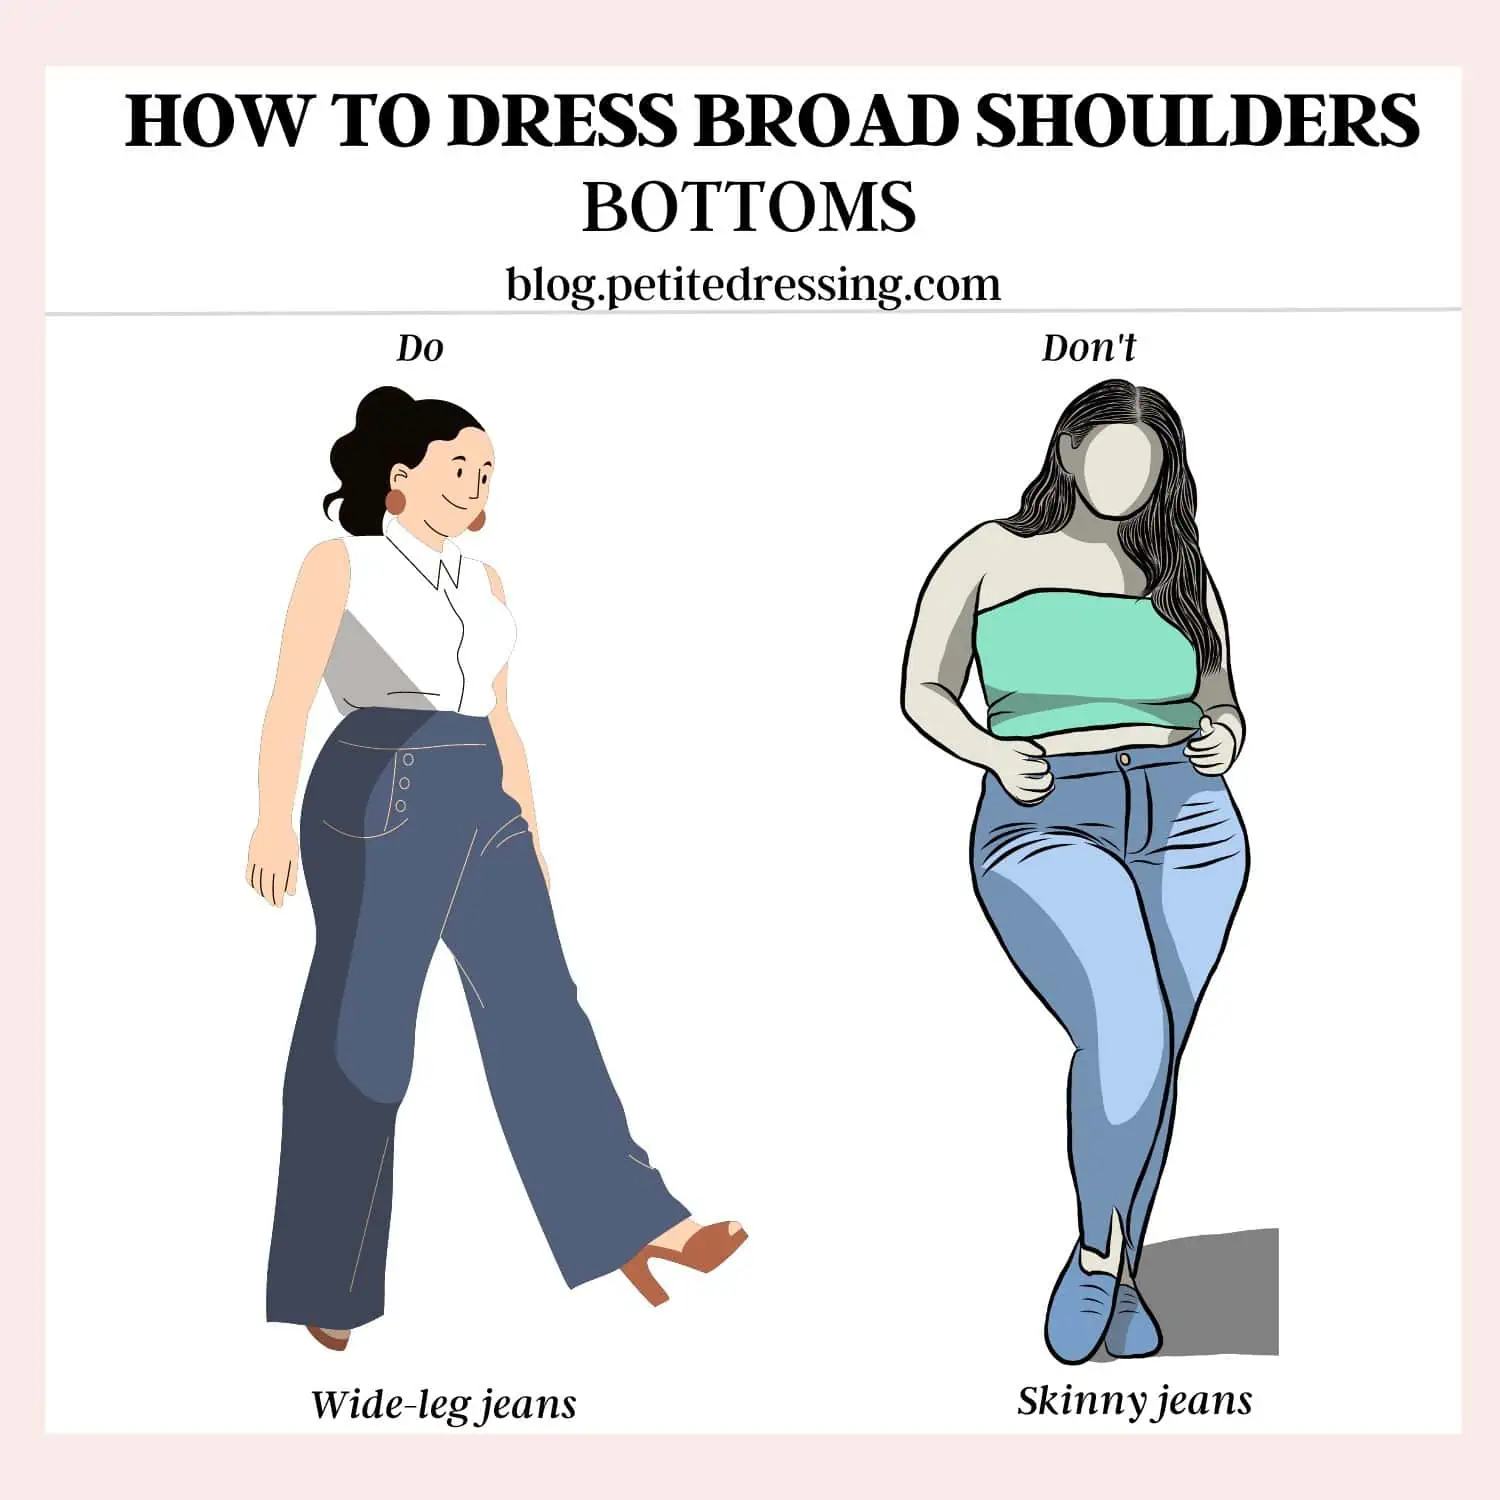 Necklines for broad shoulders  Broad shoulders, Big shoulders, Diy sewing  clothes